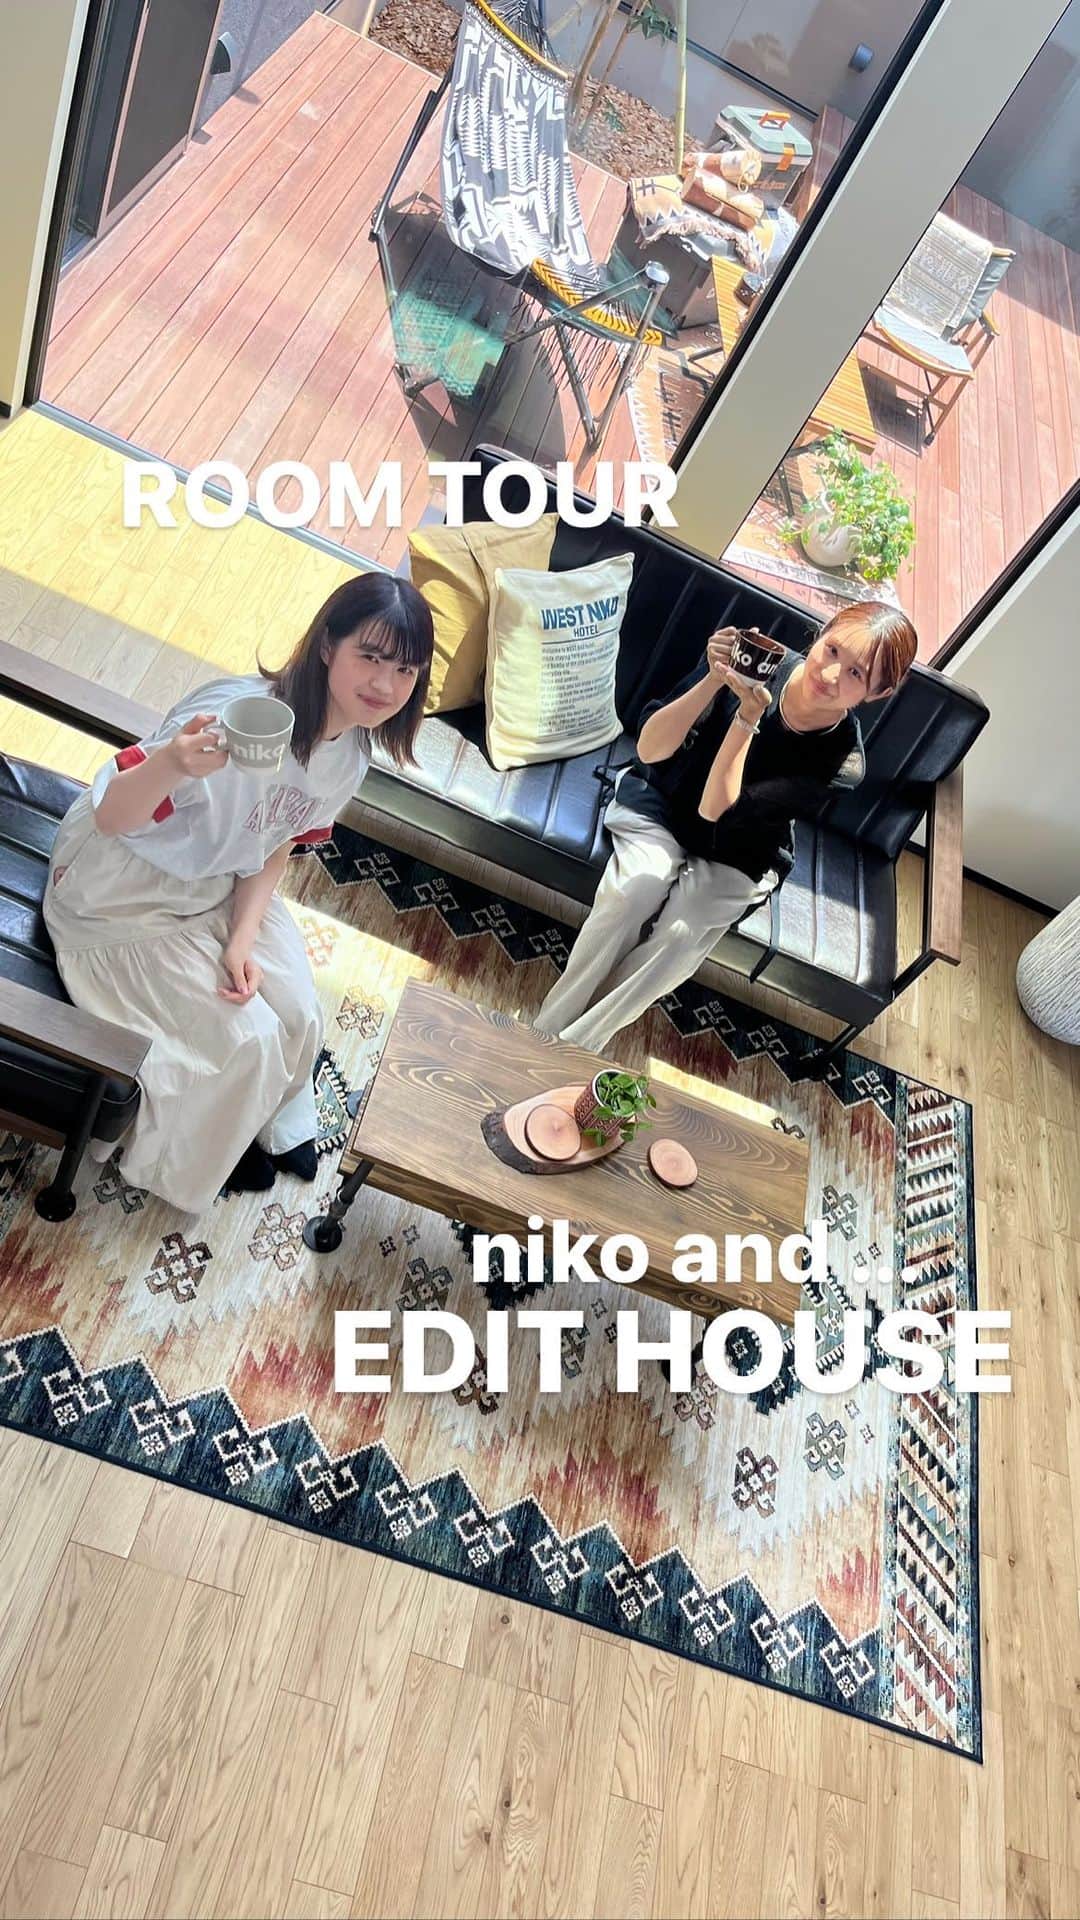 niko and ...のインスタグラム